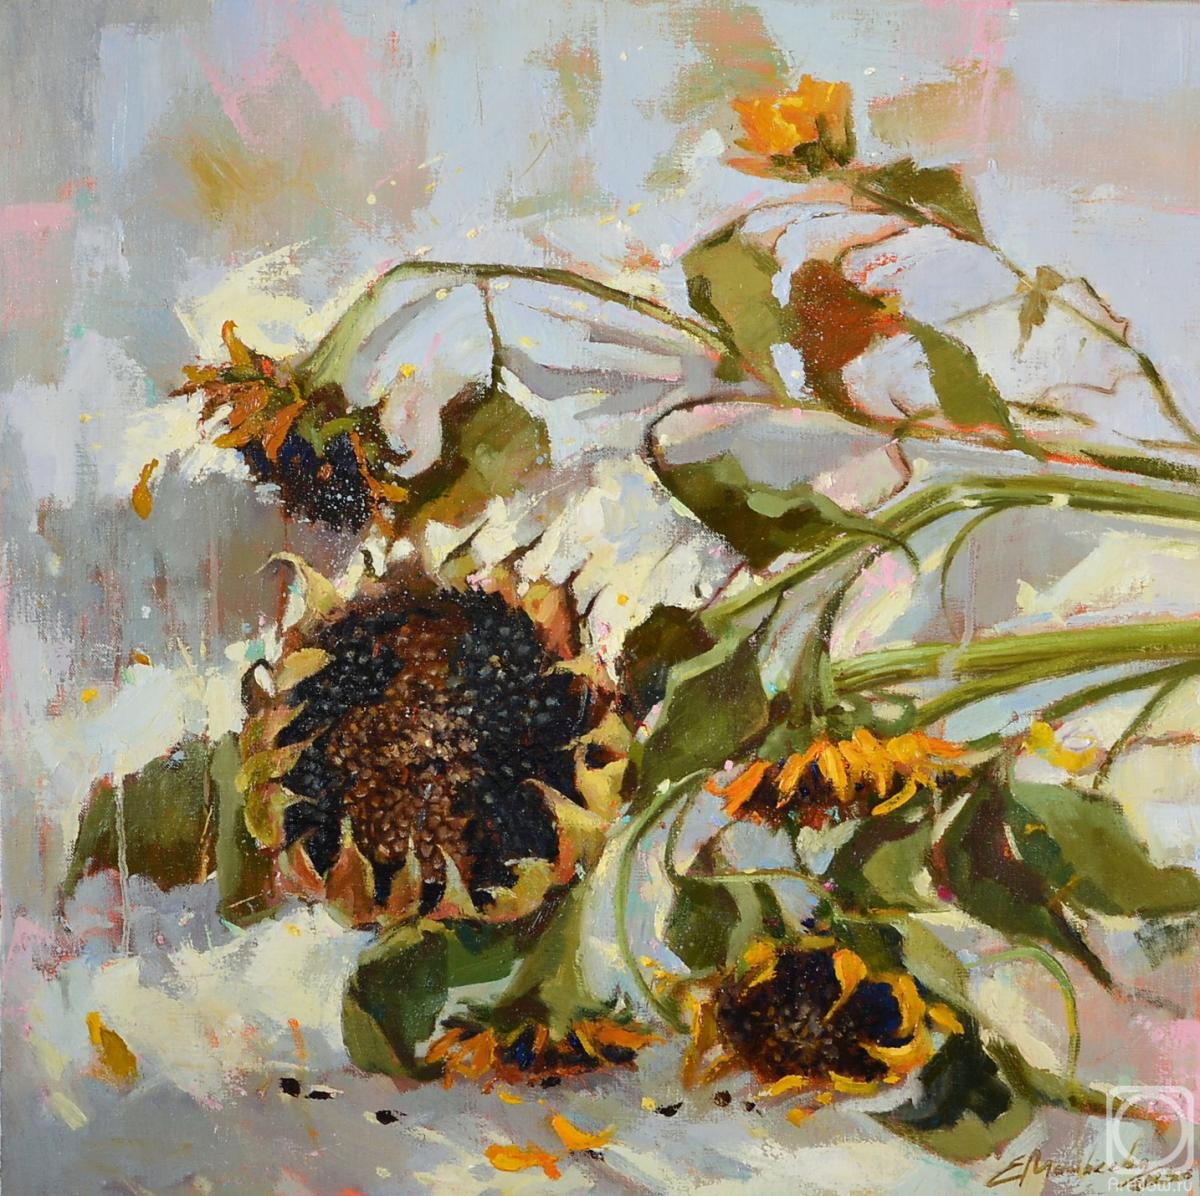 Matveeva Evgeniya. Sunflowers